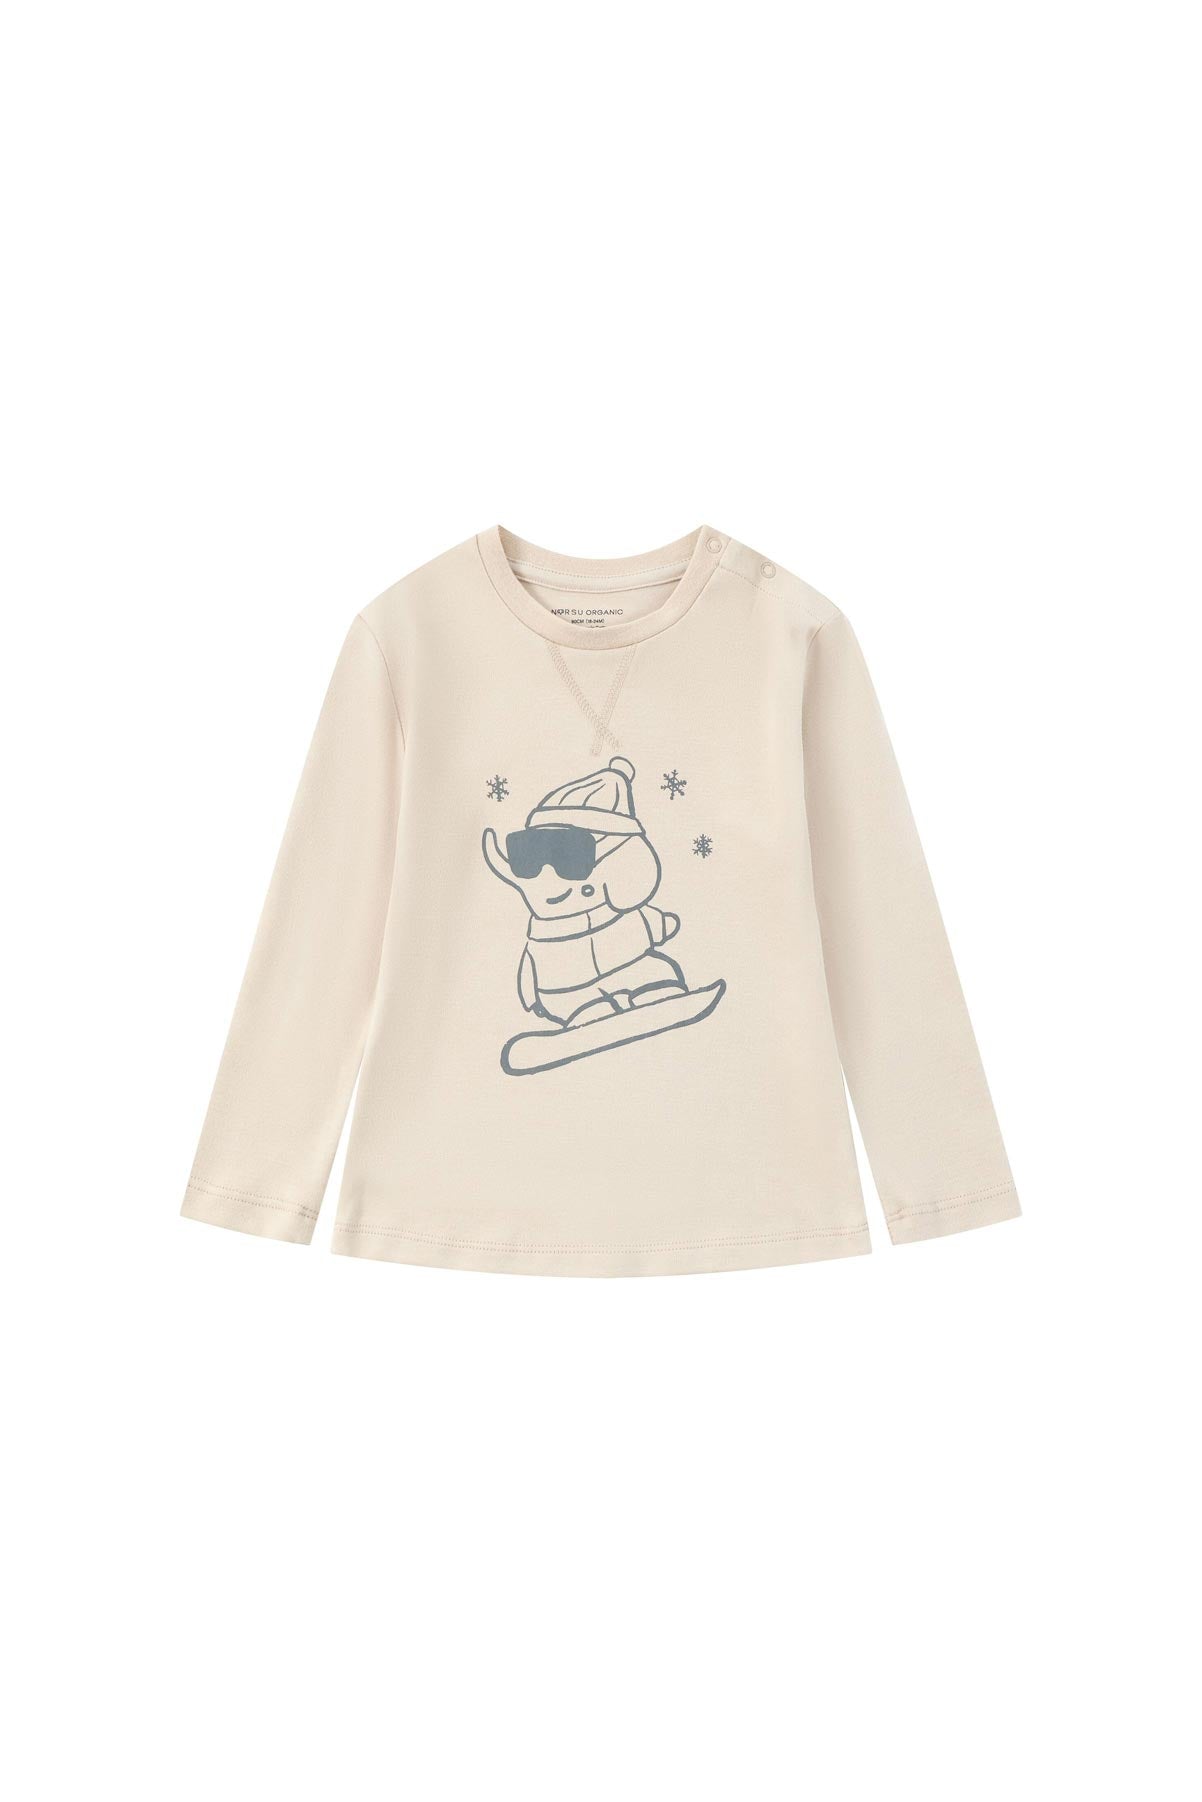 front of Toddler Organic Long Sleeve Tee Shirt-Snowboarding